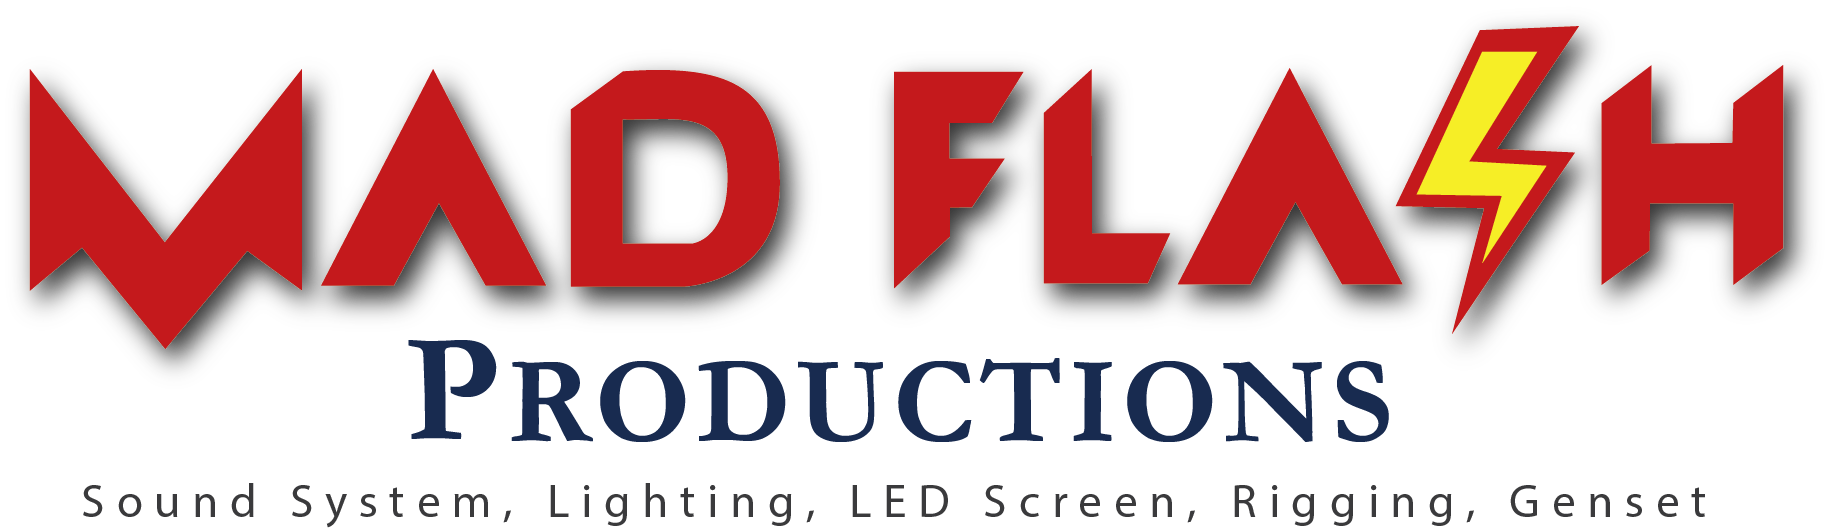 Mad Flash Production